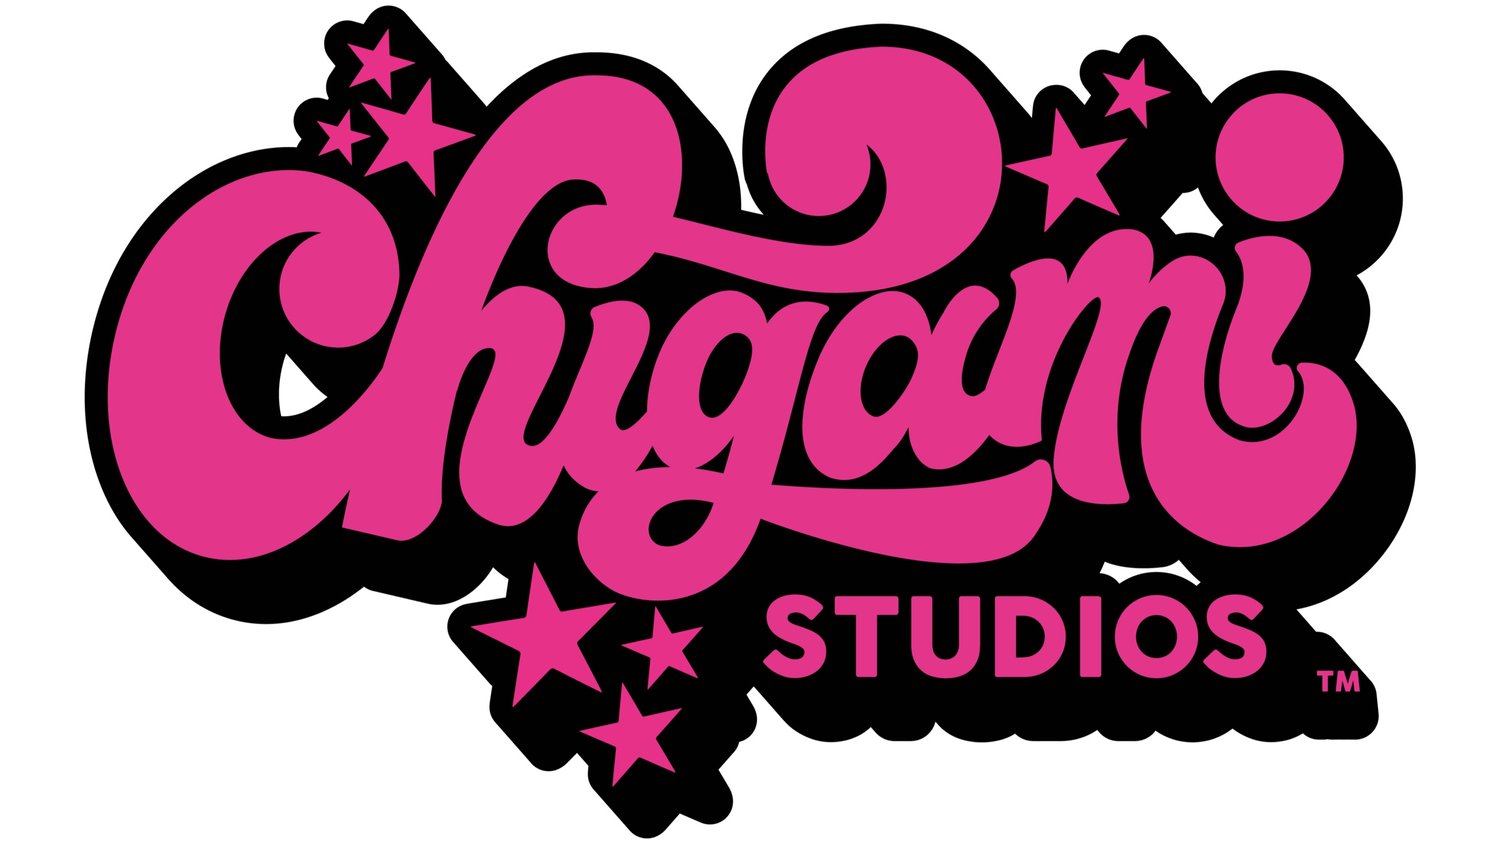 Chigami Studios